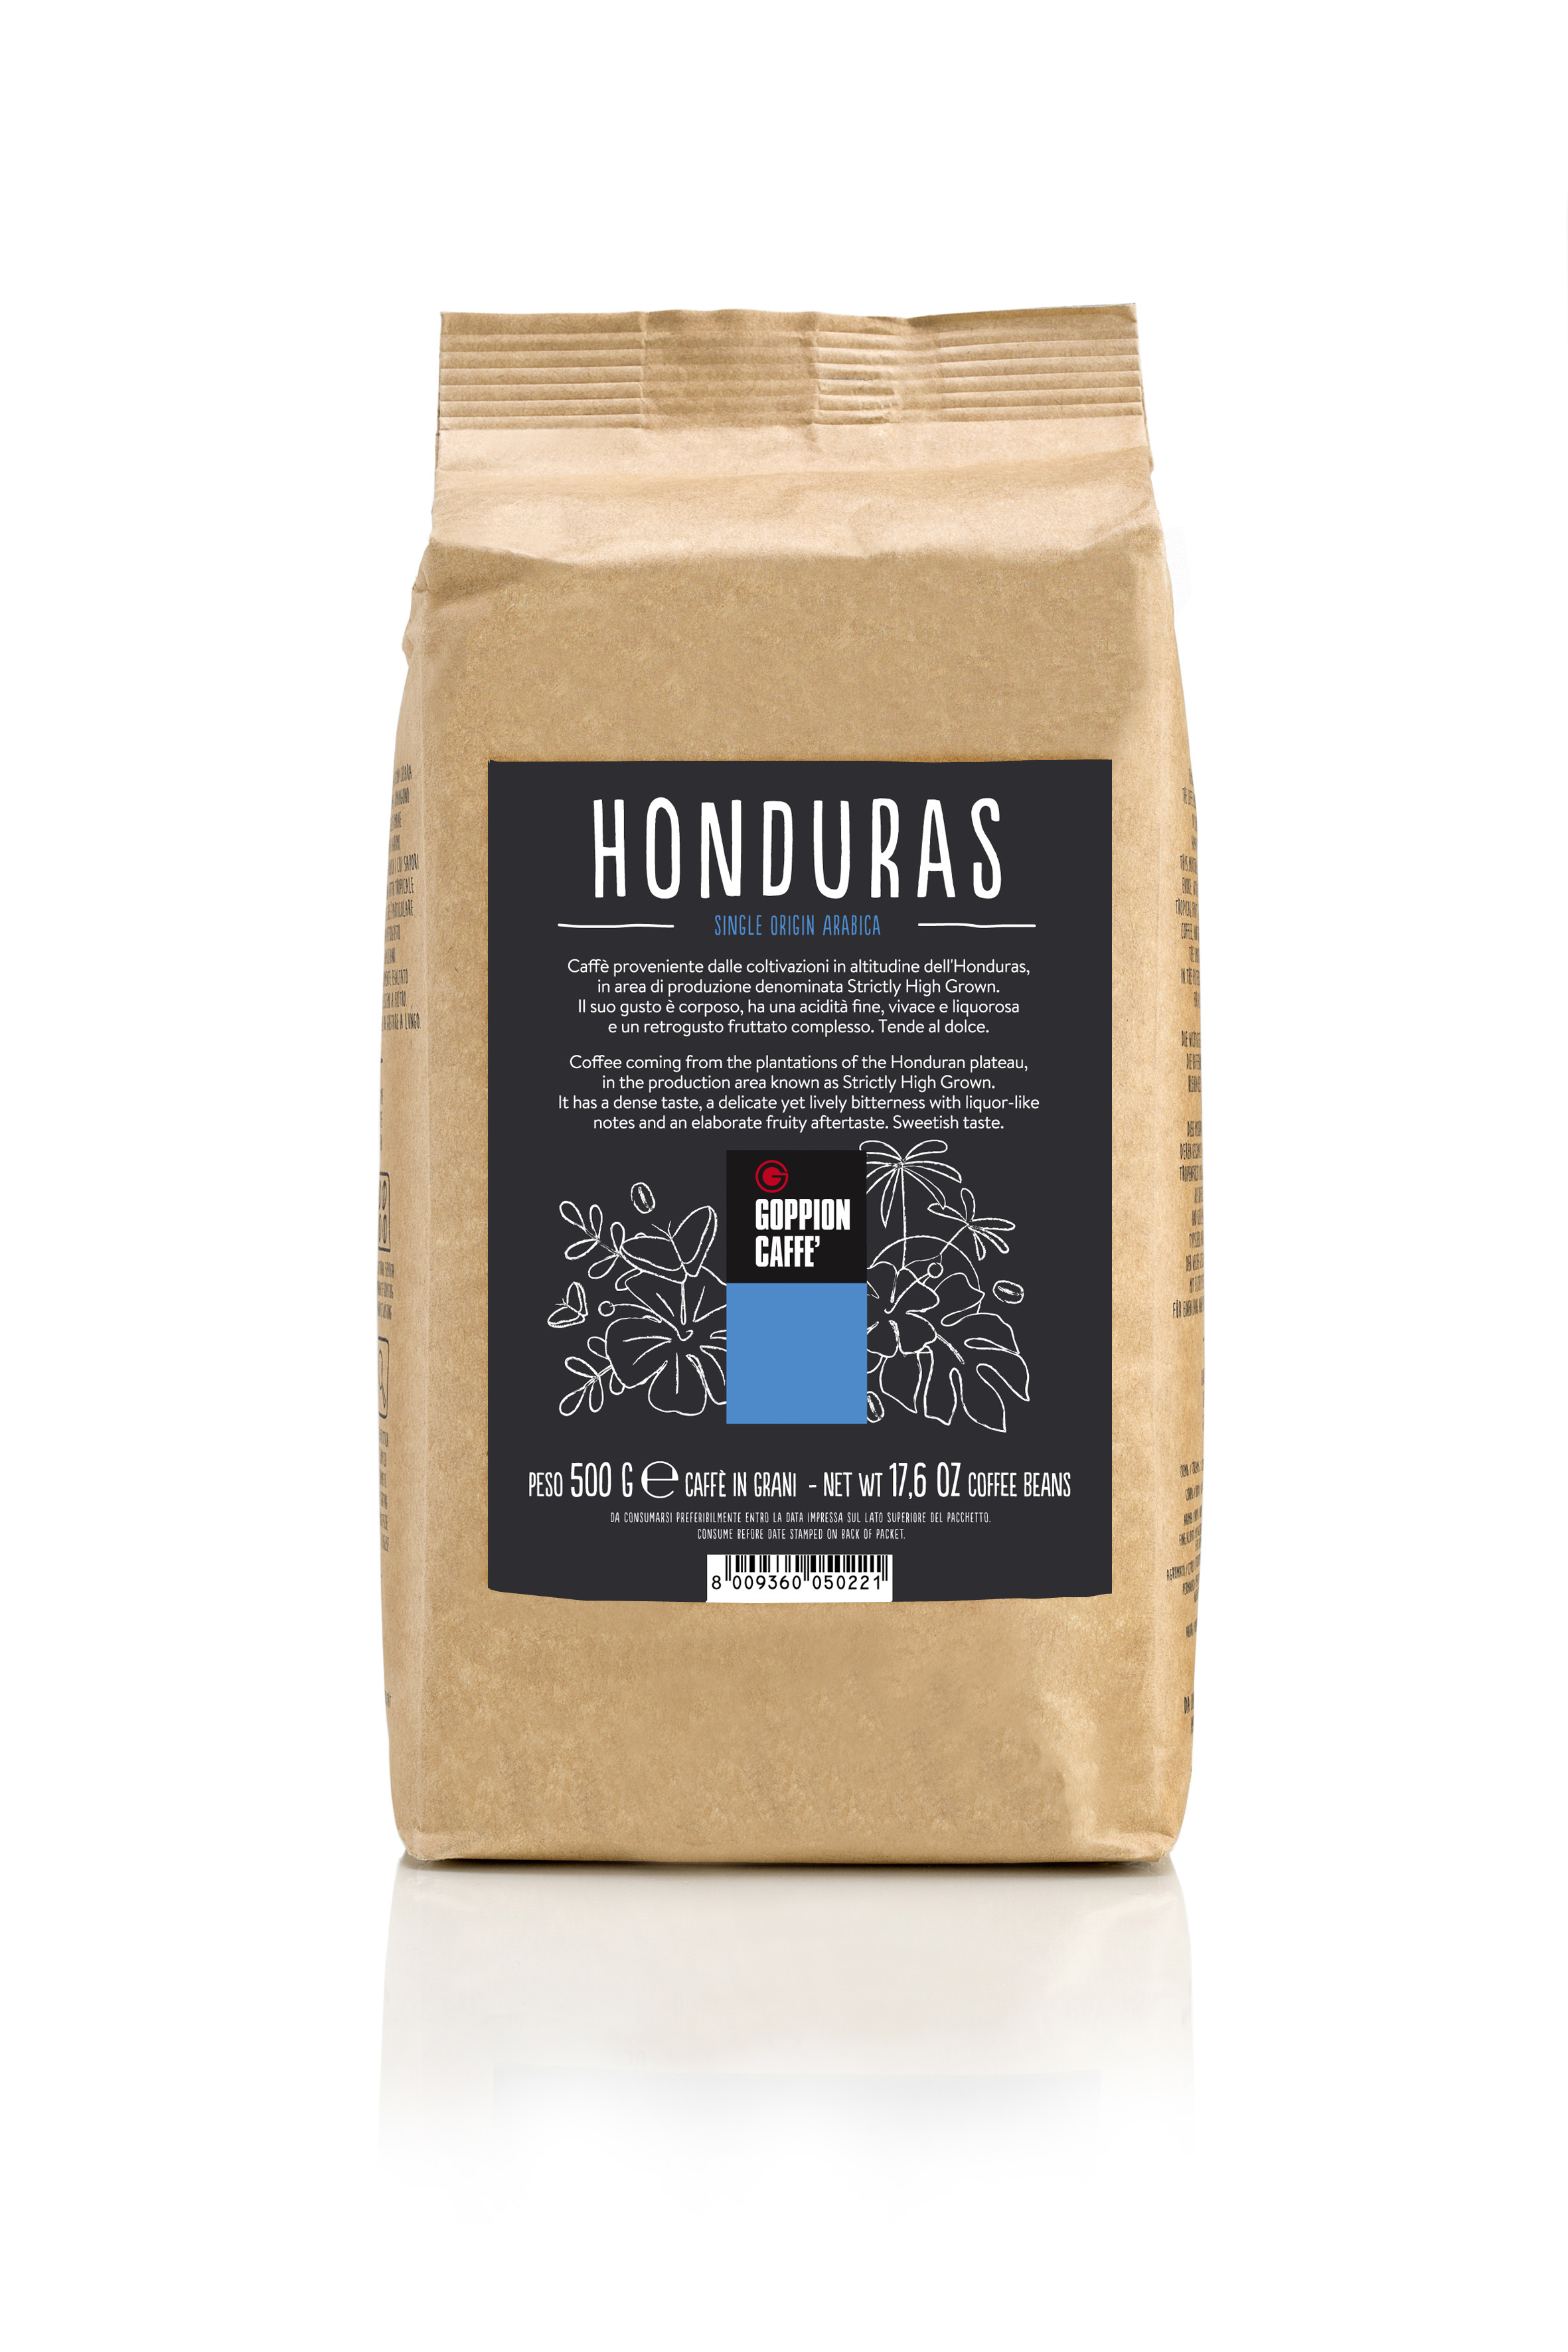 Honduras Goppion Caffè